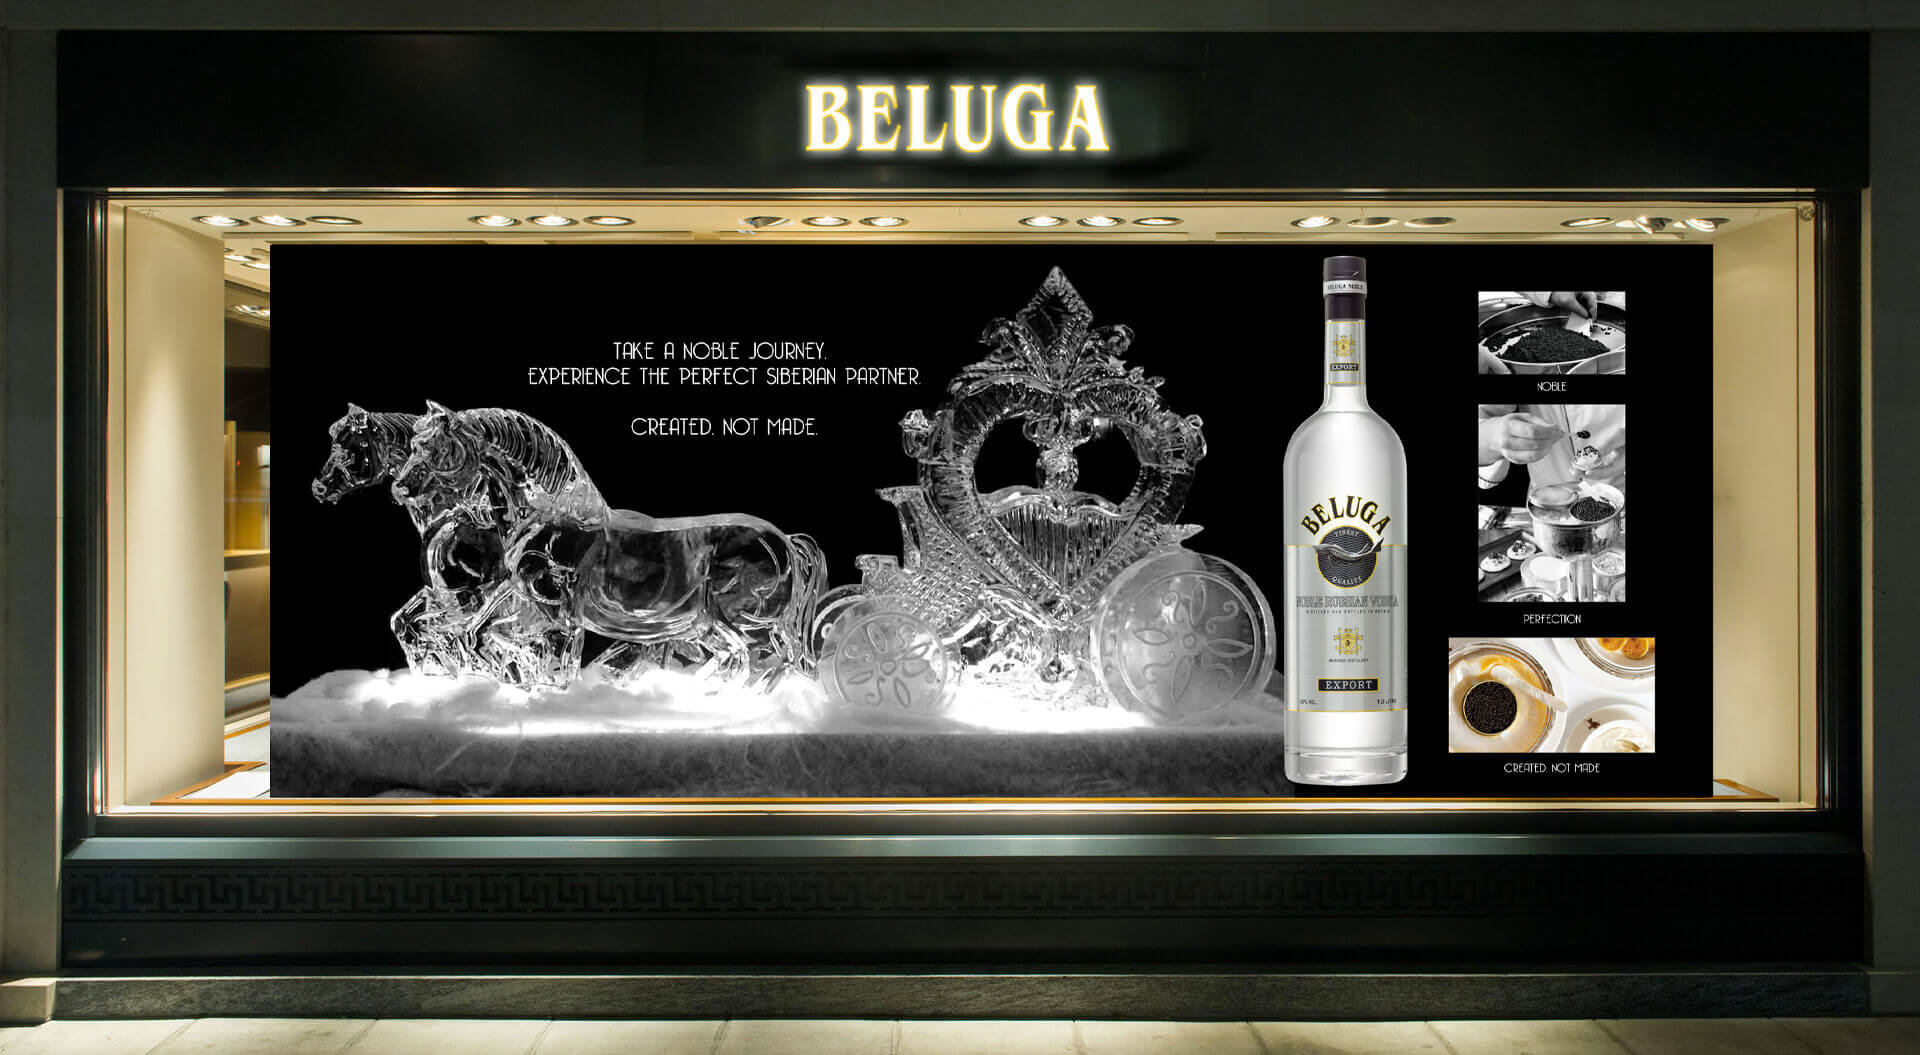 Beluga Vodka Russia, Luxury Alcohol Branding, Marketing & Advertising, Retail Graphic Communications - CampbellRigg Agency